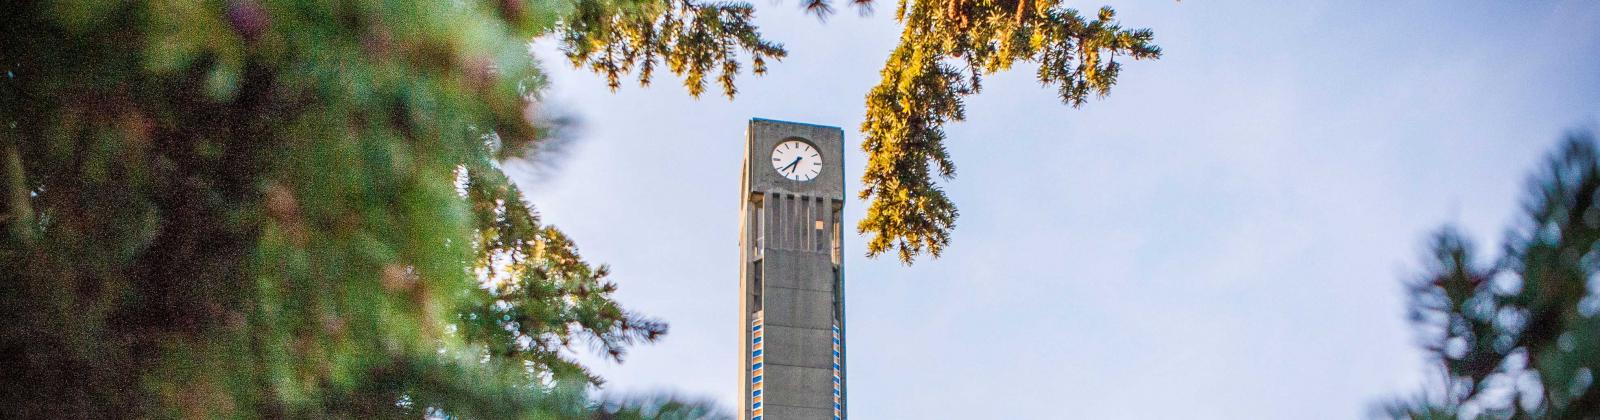 ubc clock tower